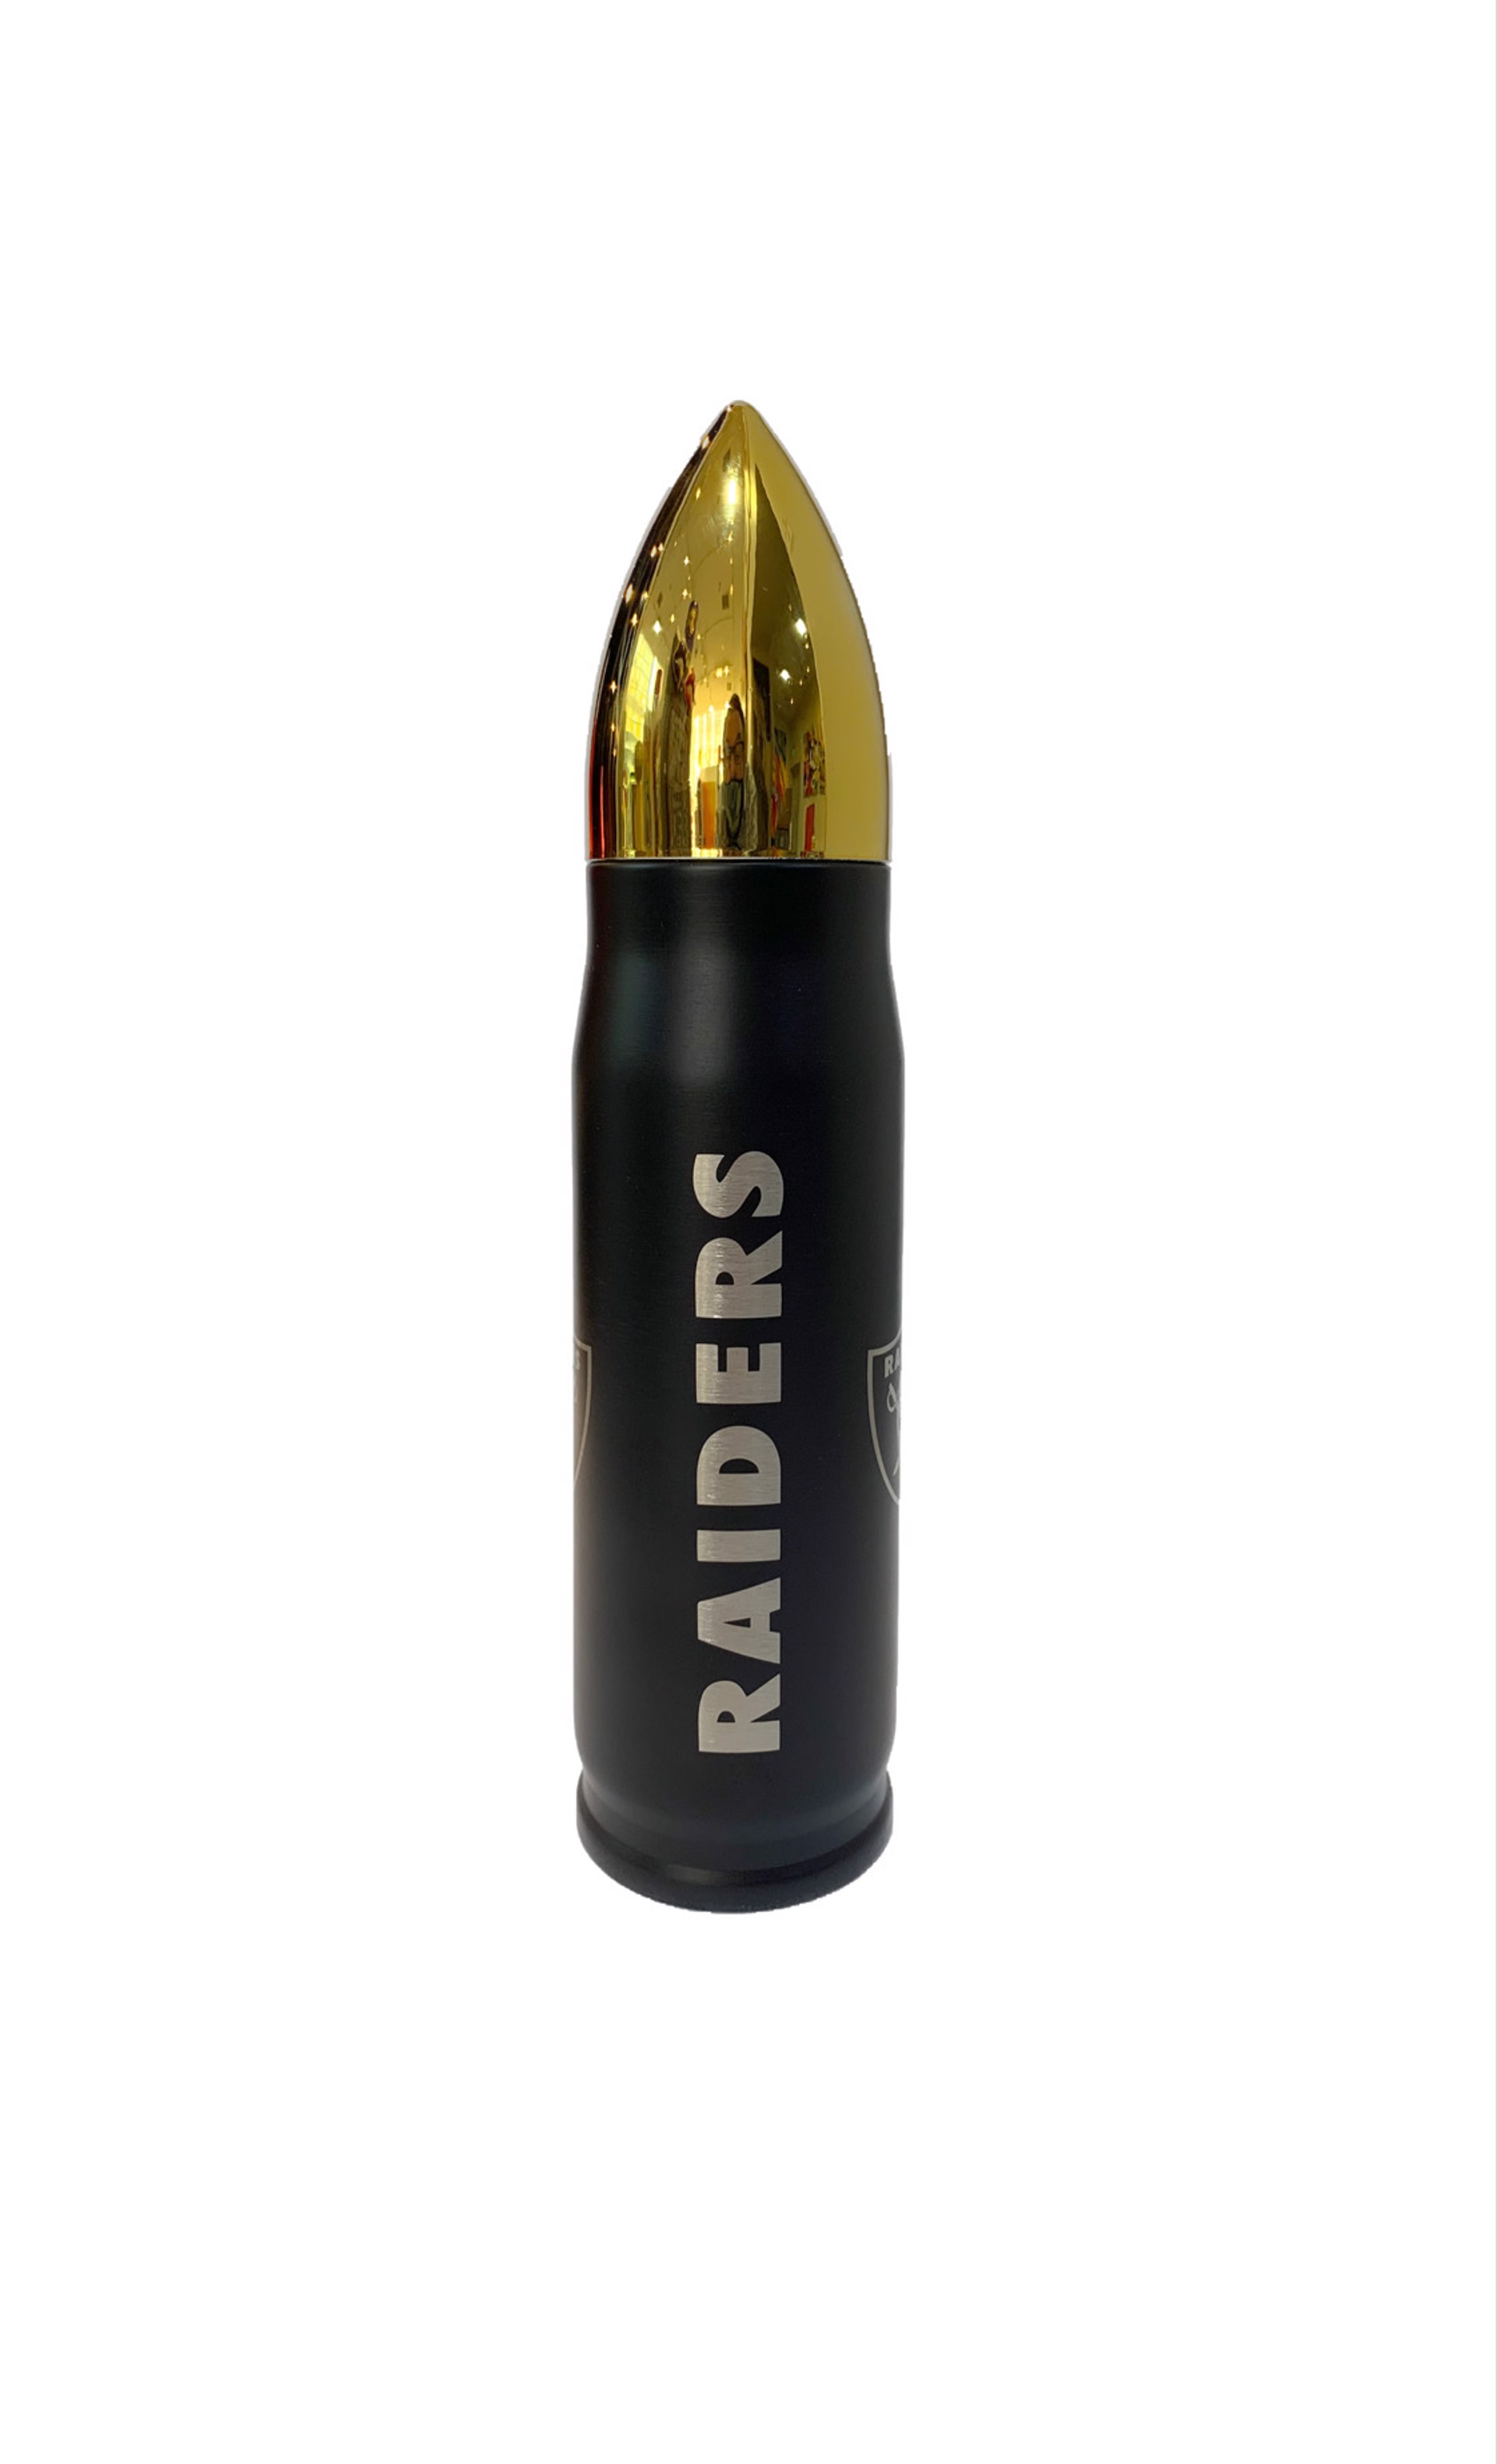 "Raiders Bullet" Small Black  by "Peaceful Brand Bullets" by Efi Mashiah